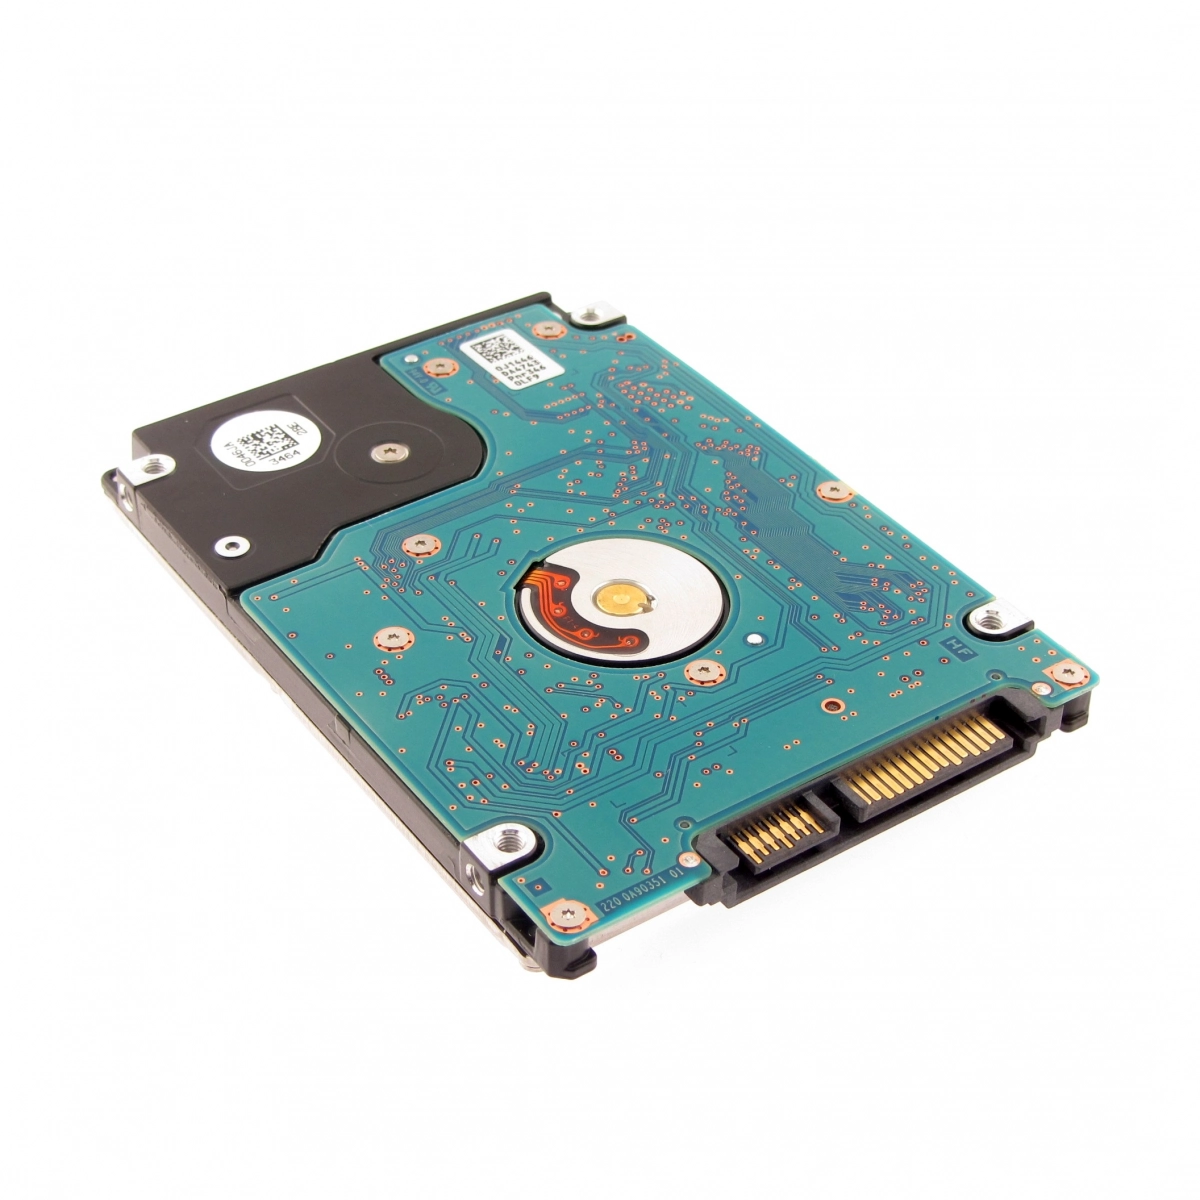 Notebook-Festplatte 1TB, 5400rpm, 128MB für LENOVO ThinkPad W520 (4284)